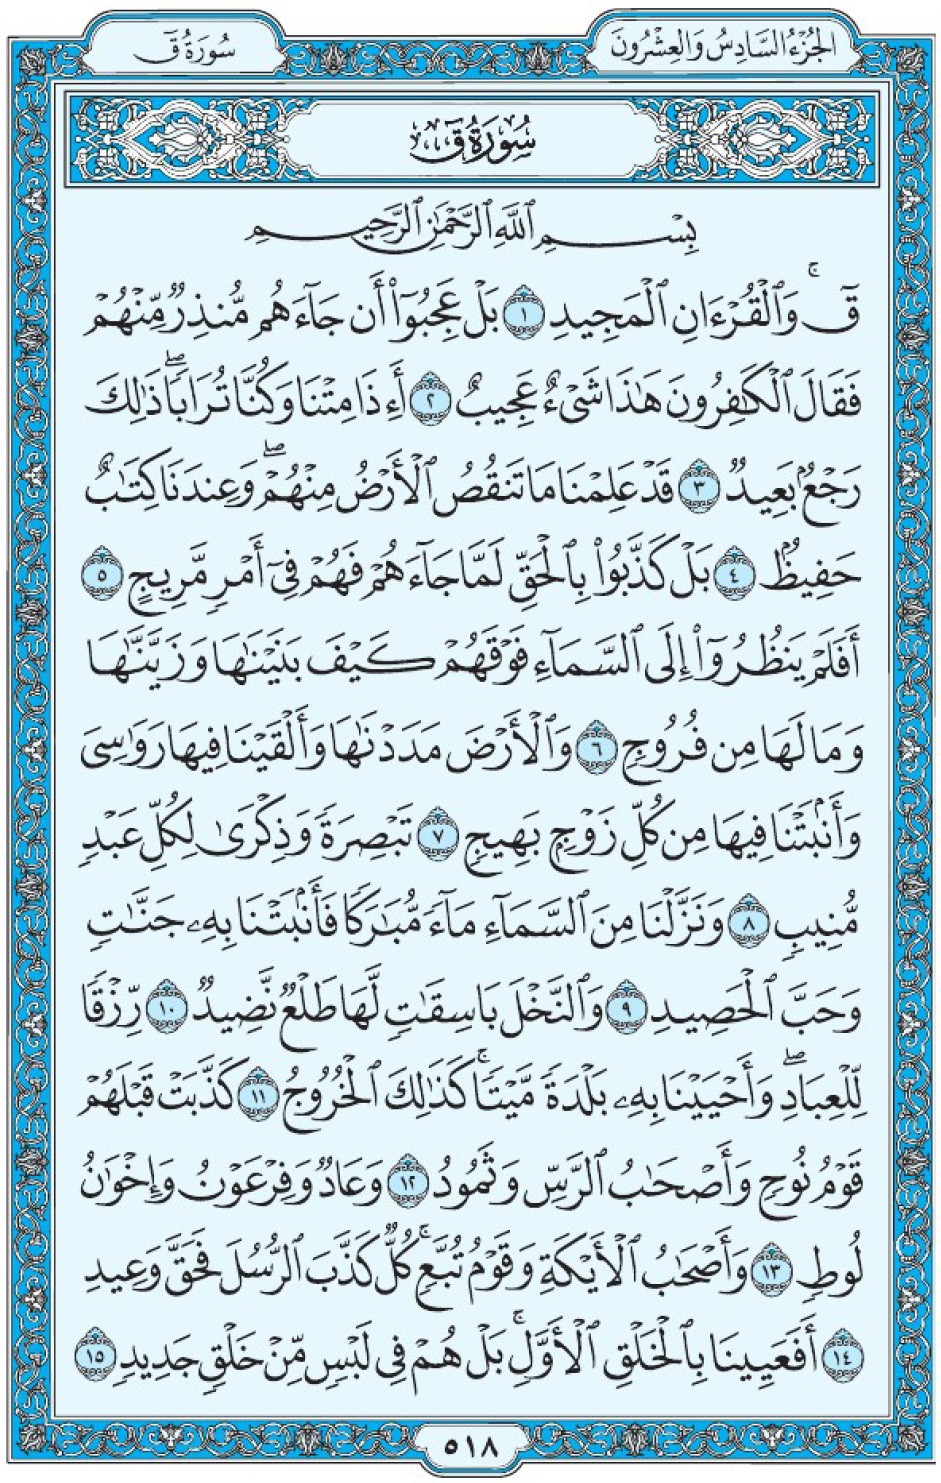 Коран Мединский мусхаф страница 518, сура 50 Каф سورة ٥٠ ق 